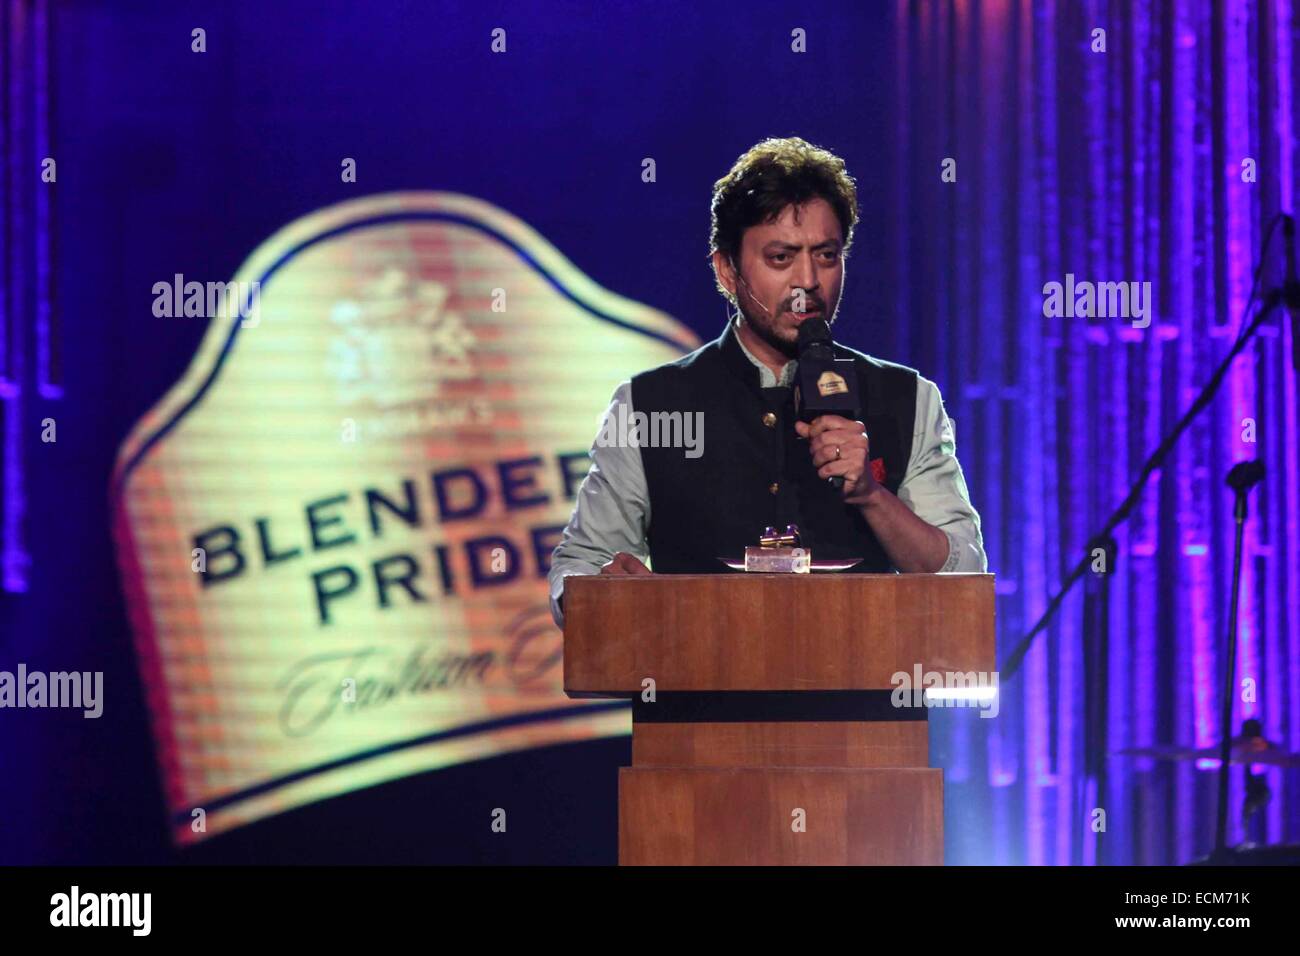 Bollywood Actor Irfan Khan speaks during the Blenders Pride Fashion Tour 2014 event in Kolkata © Bhaskar Mallick/Pacific Press/Alamy Live News Stock Photo